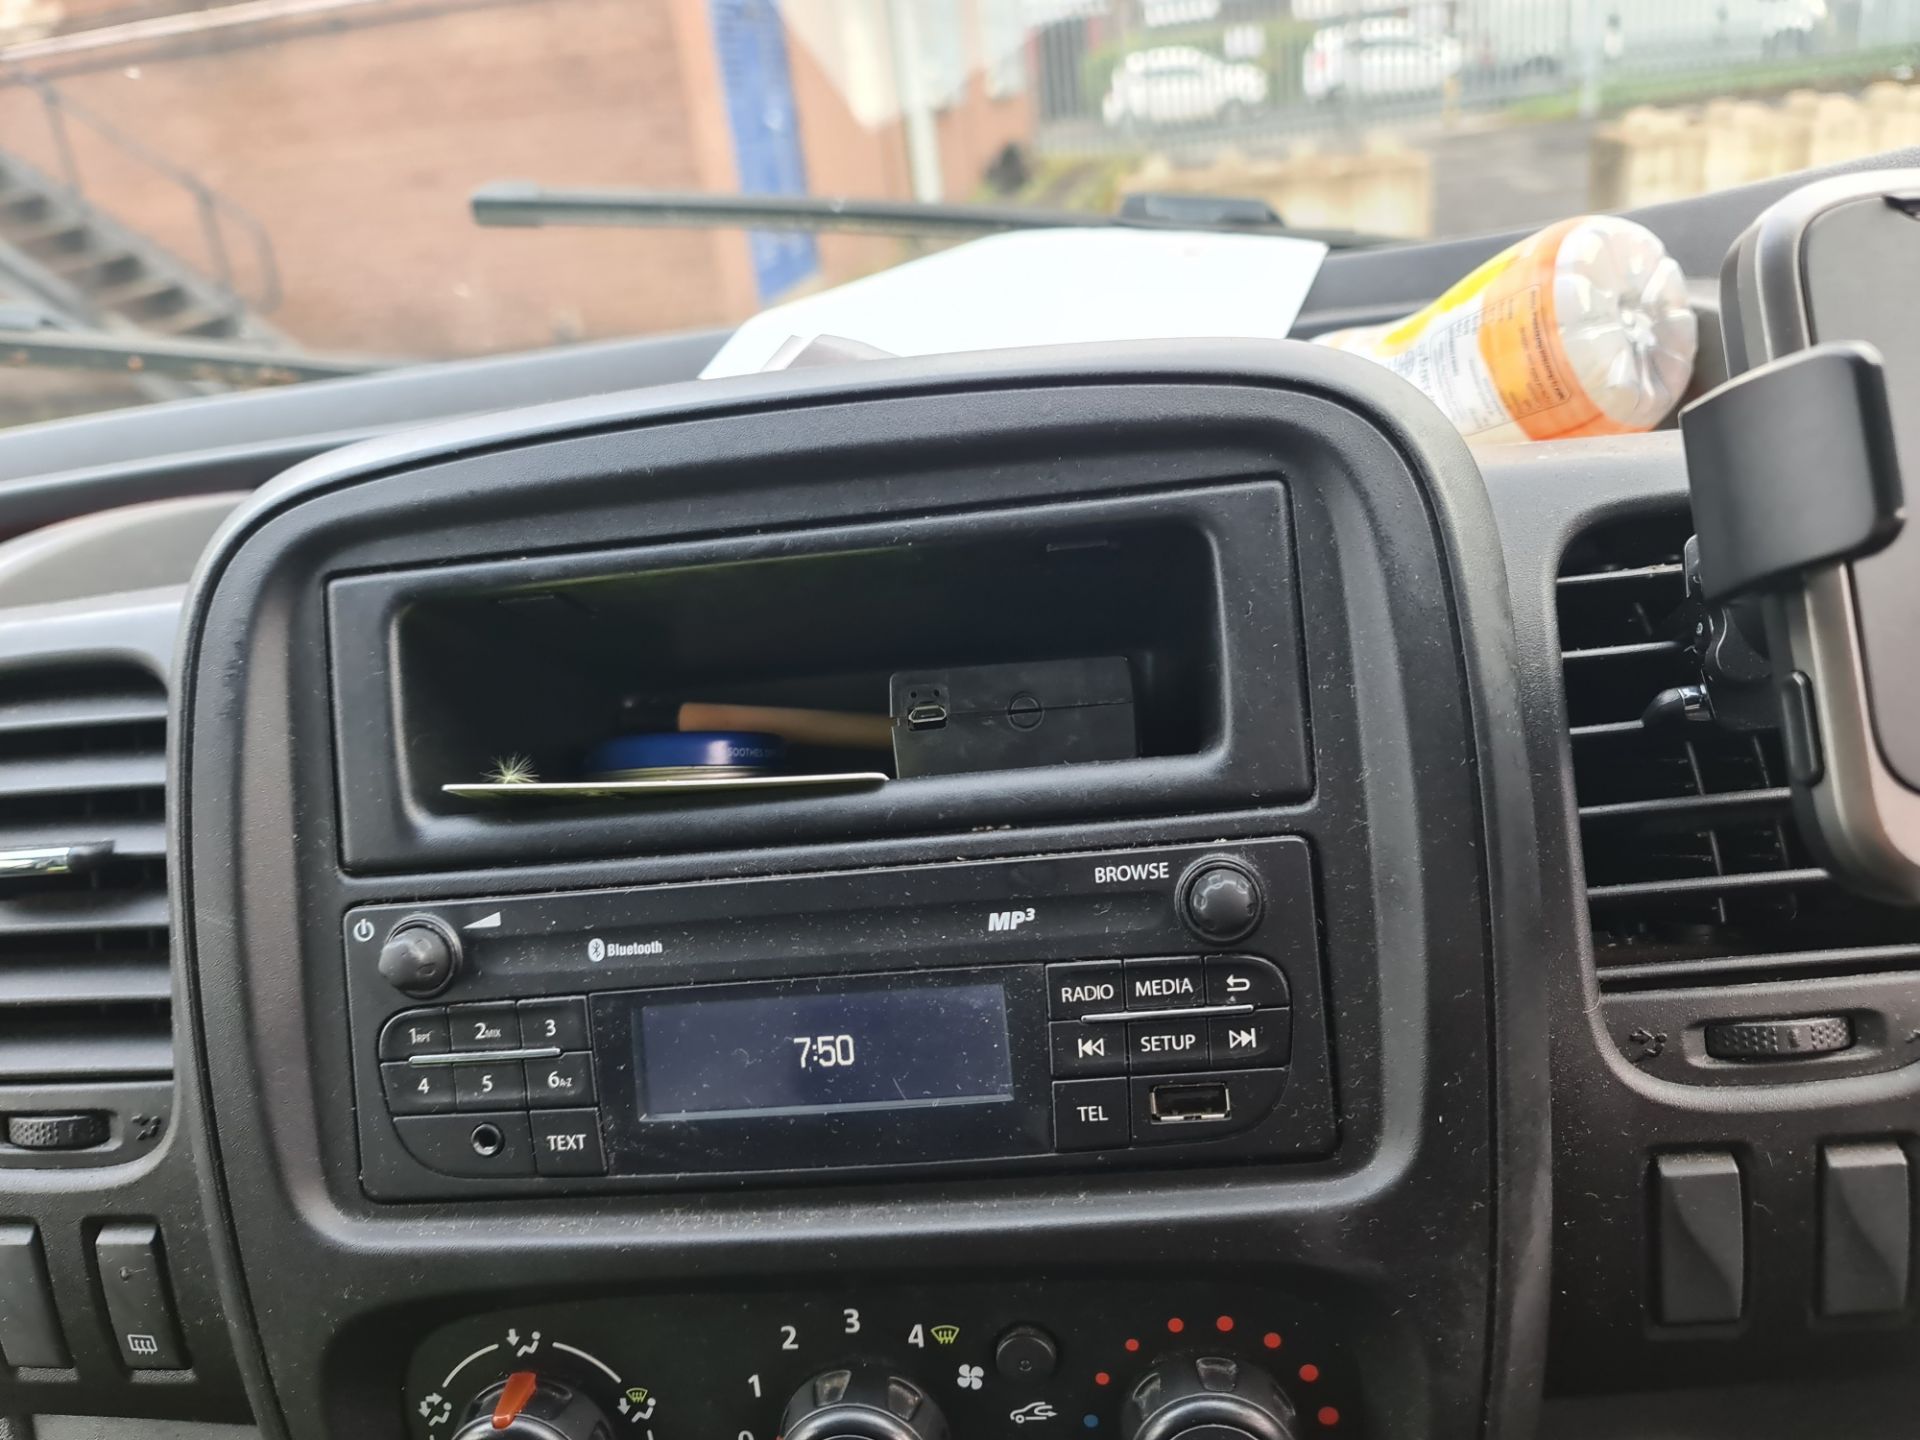 2015 Vauxhall Vivaro 2900 CDTi panel van - Image 79 of 81